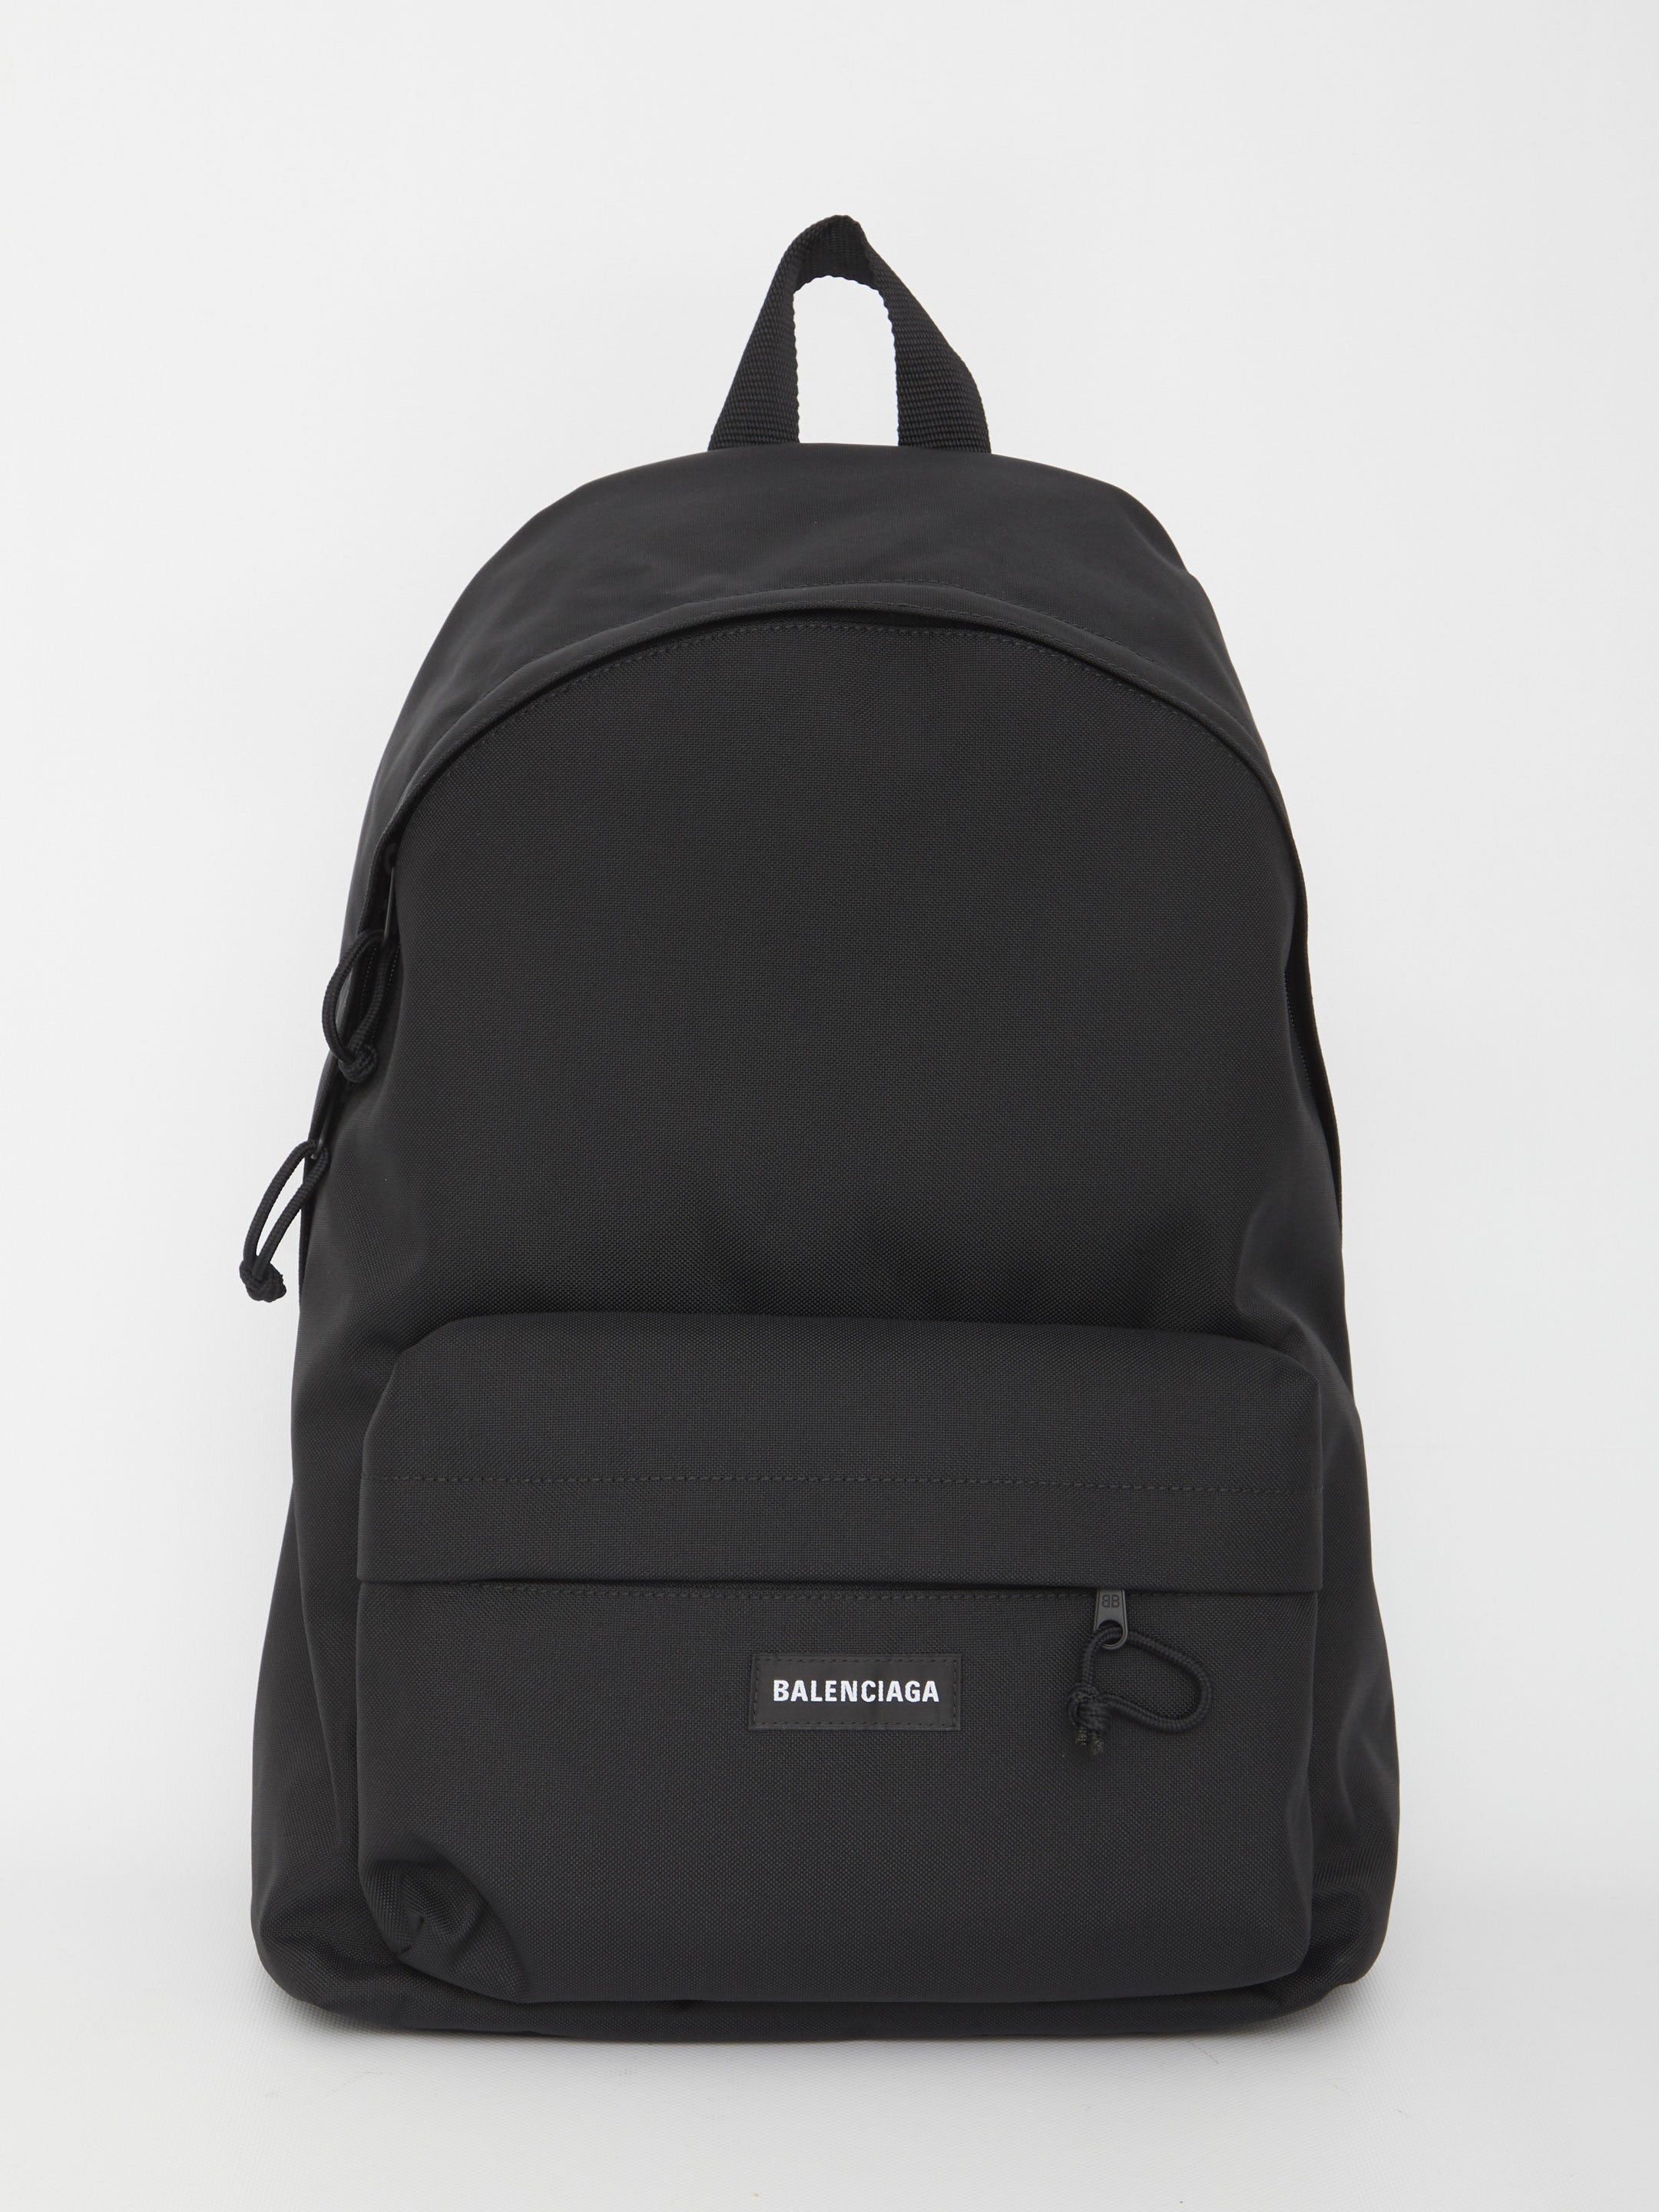 BALENCIAGA-OUTLET-SALE-Explorer-backpack-Taschen-QT-BLACK-ARCHIVE-COLLECTION.jpg